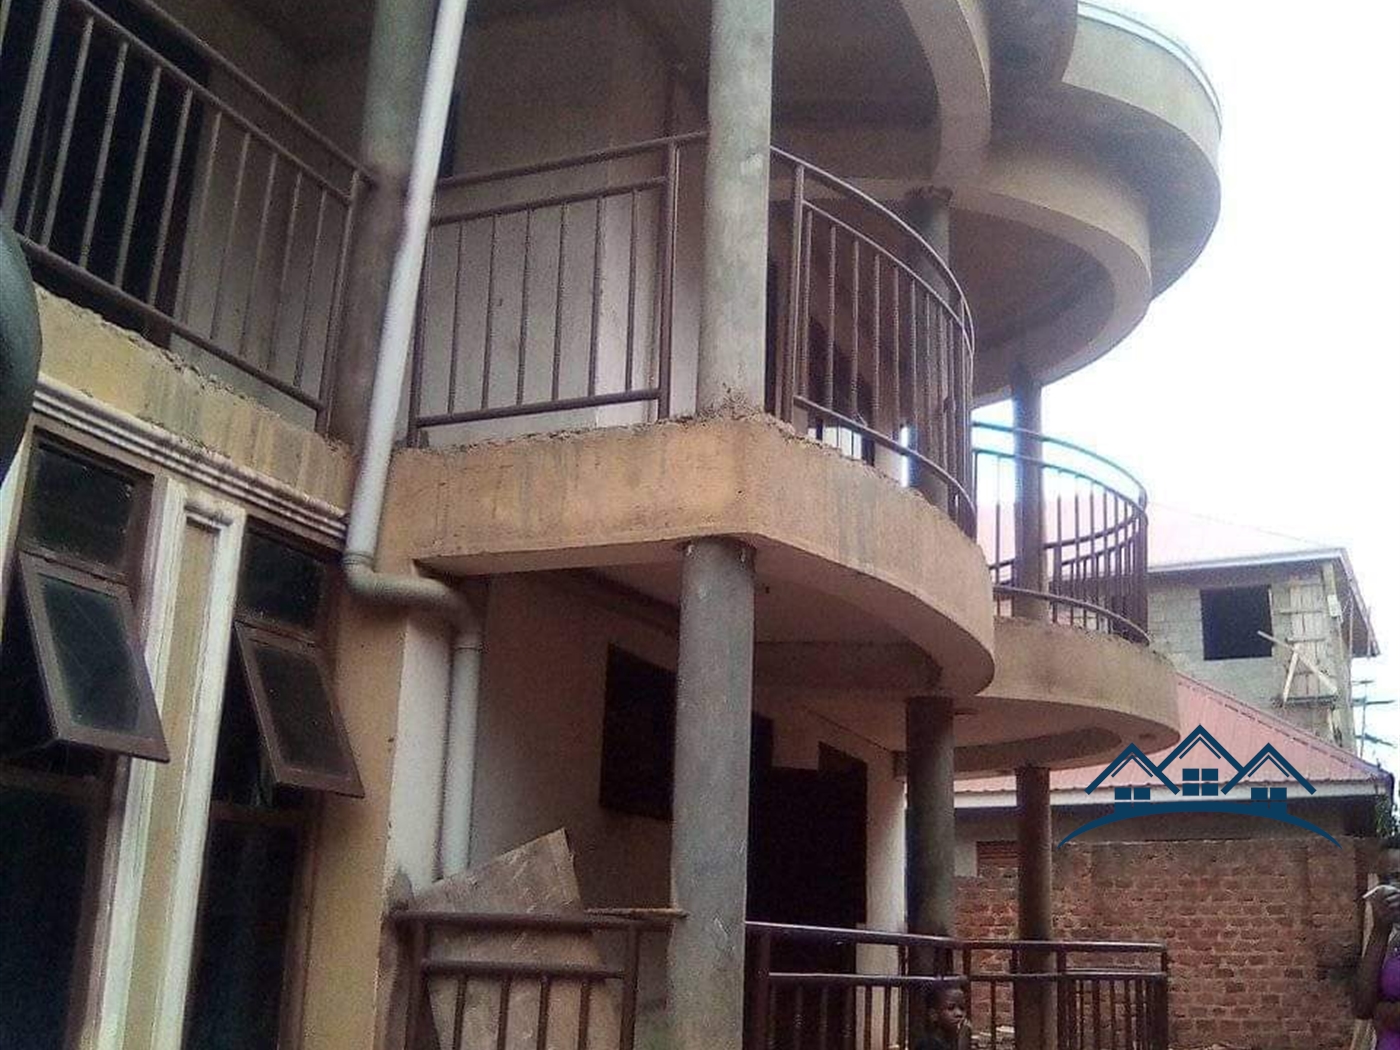 Storeyed house for sale in Busingiri Wakiso